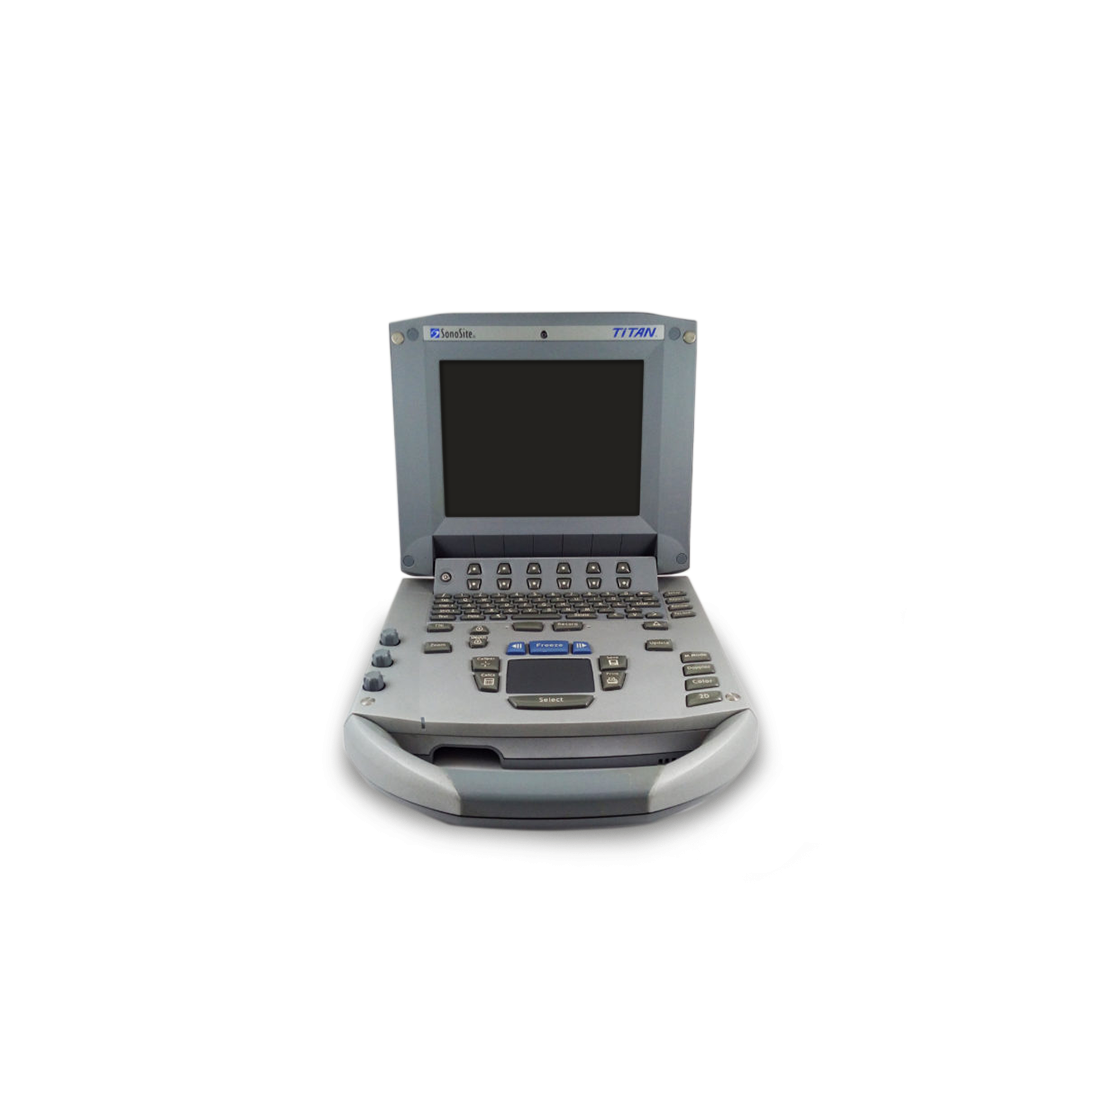 Sonosite Titan Portable Ultrasound